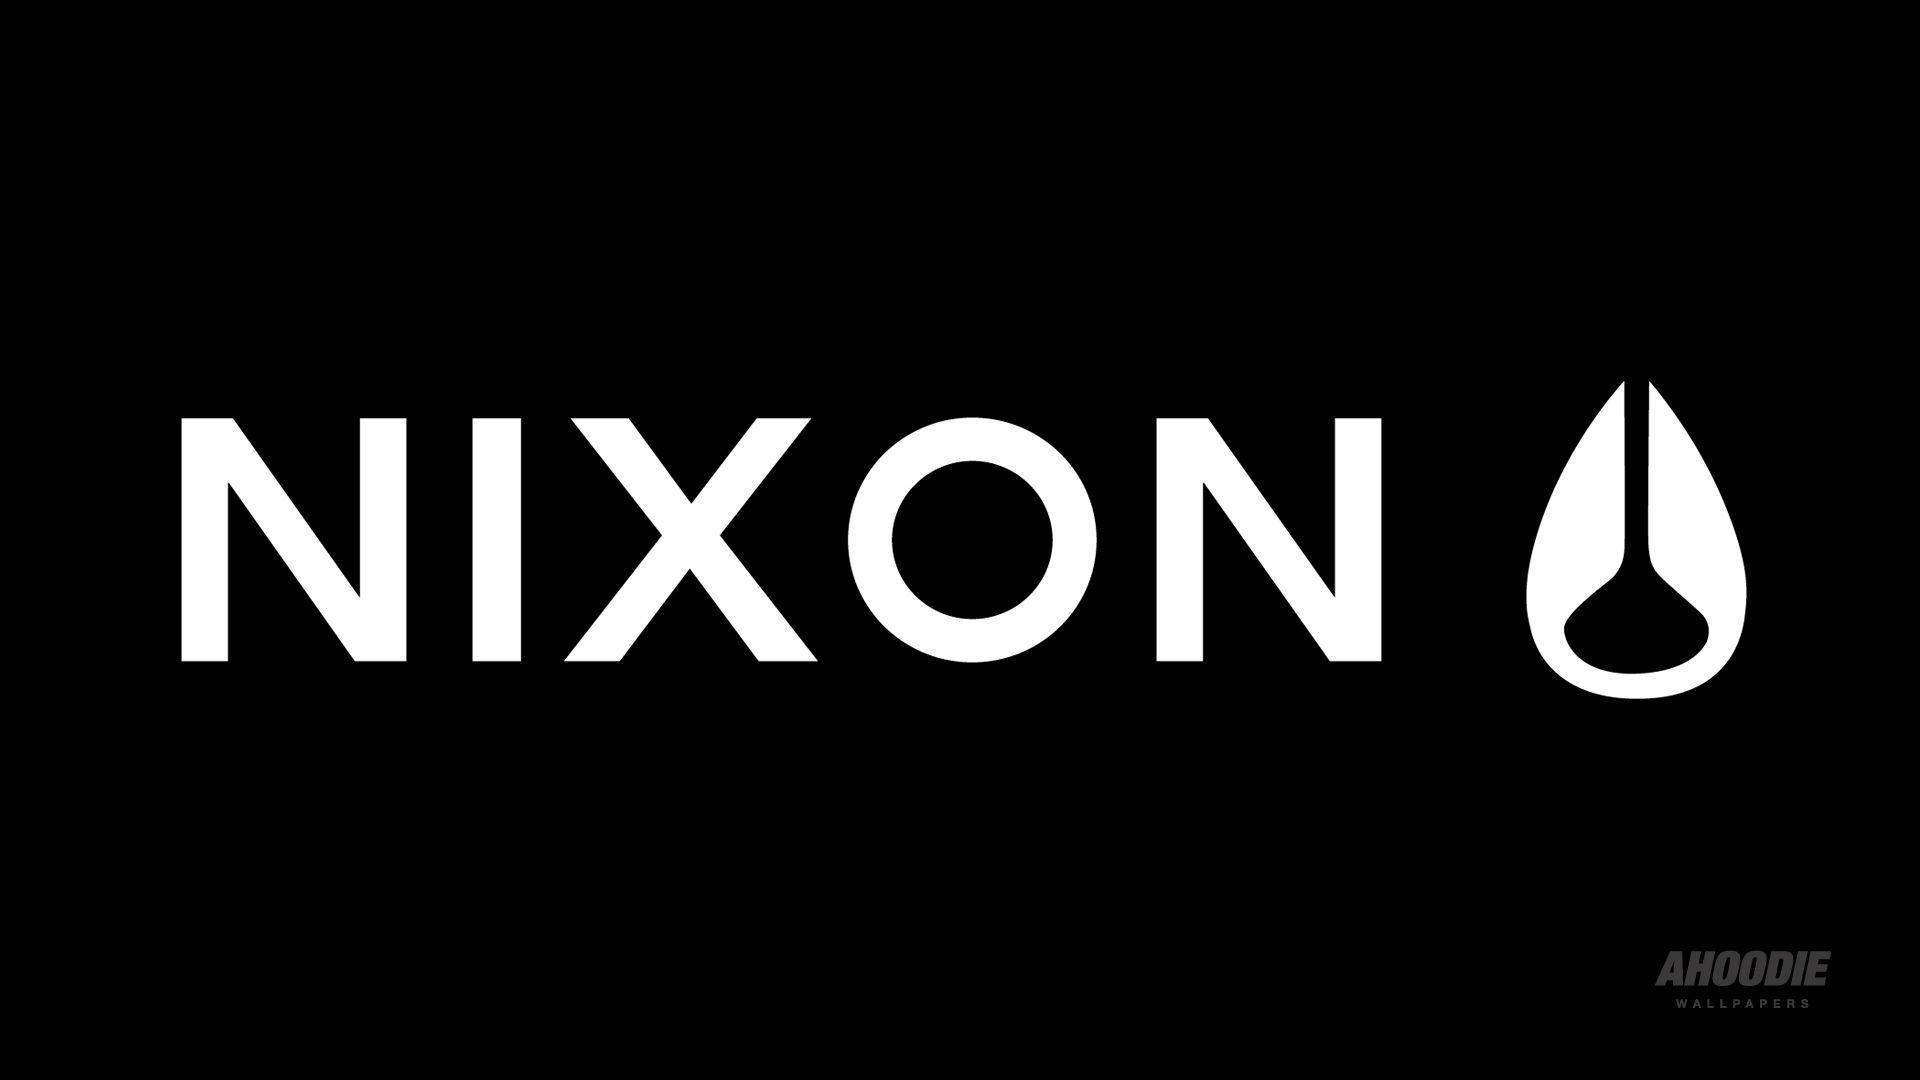 Nixon Logo - nixon logo - Google Search | Logos + Identity | Pinterest | Logos ...